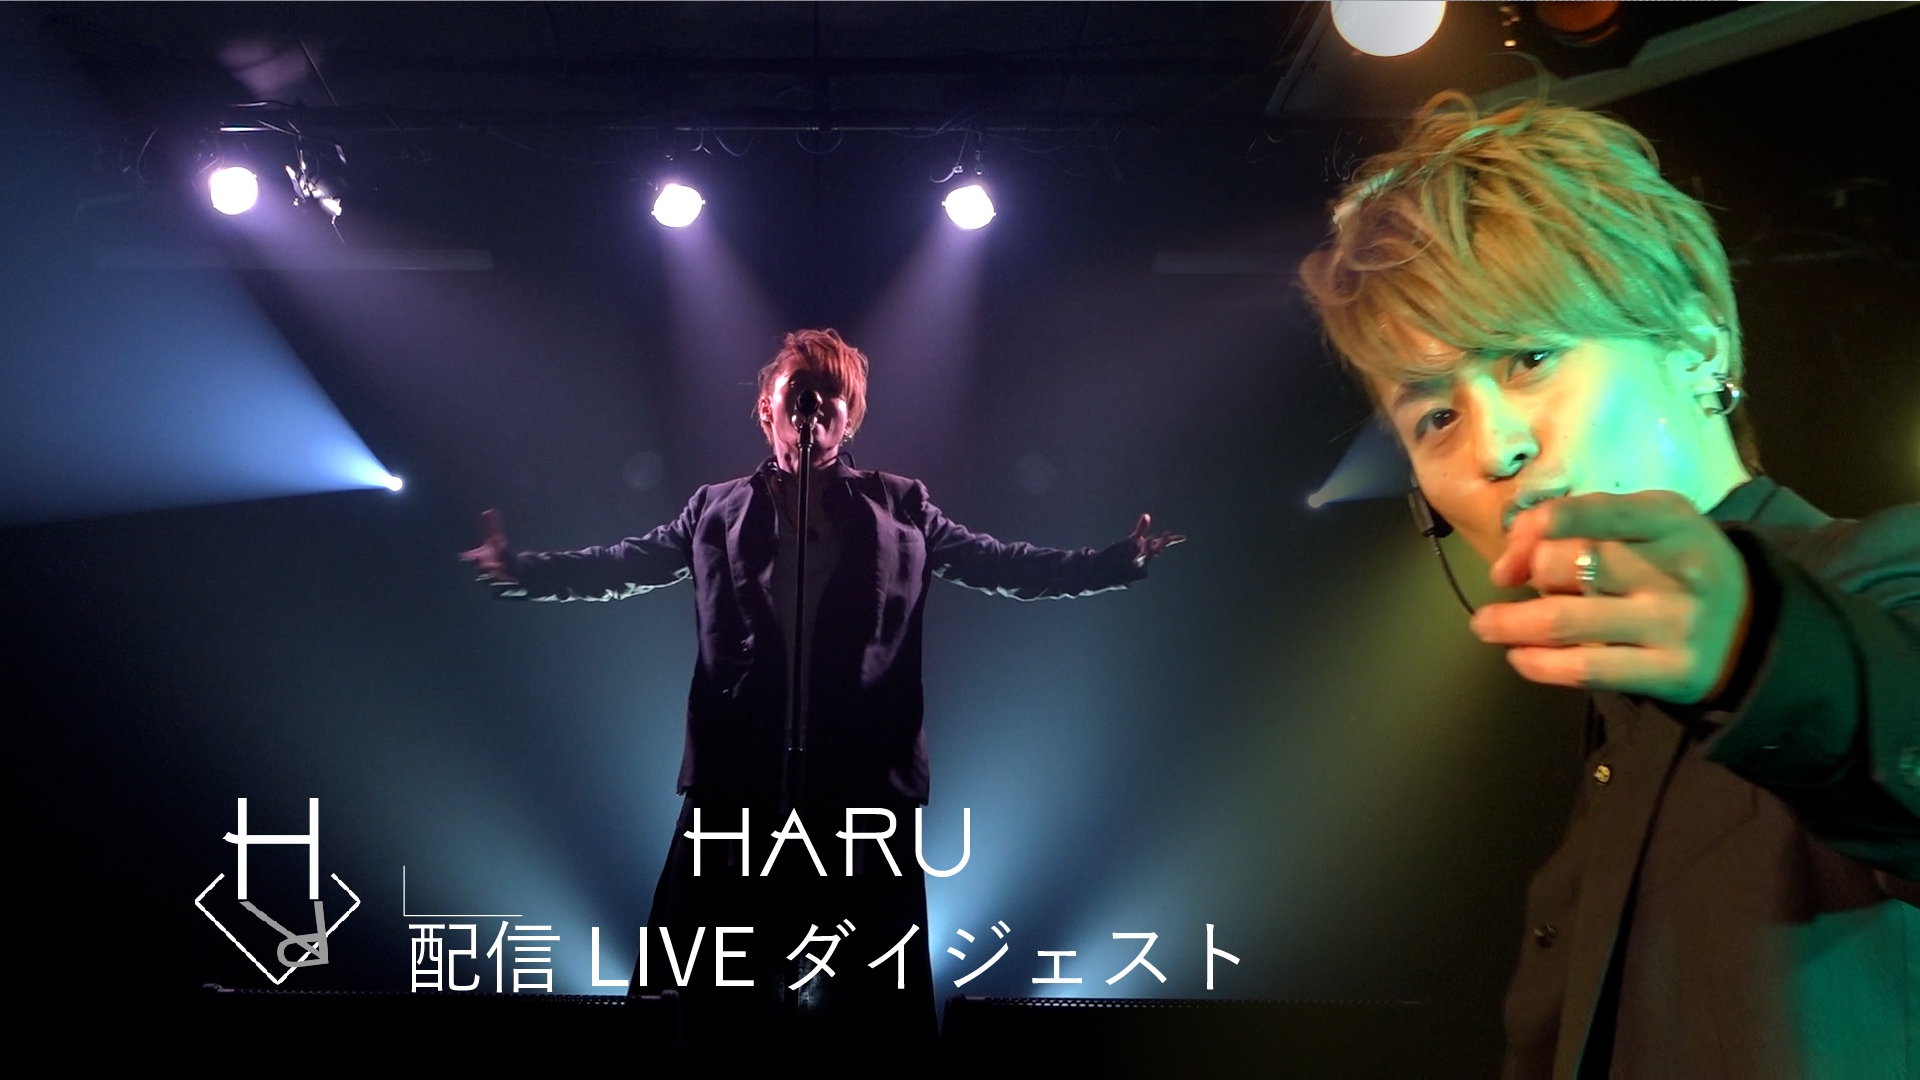 Movie Haru Official Website